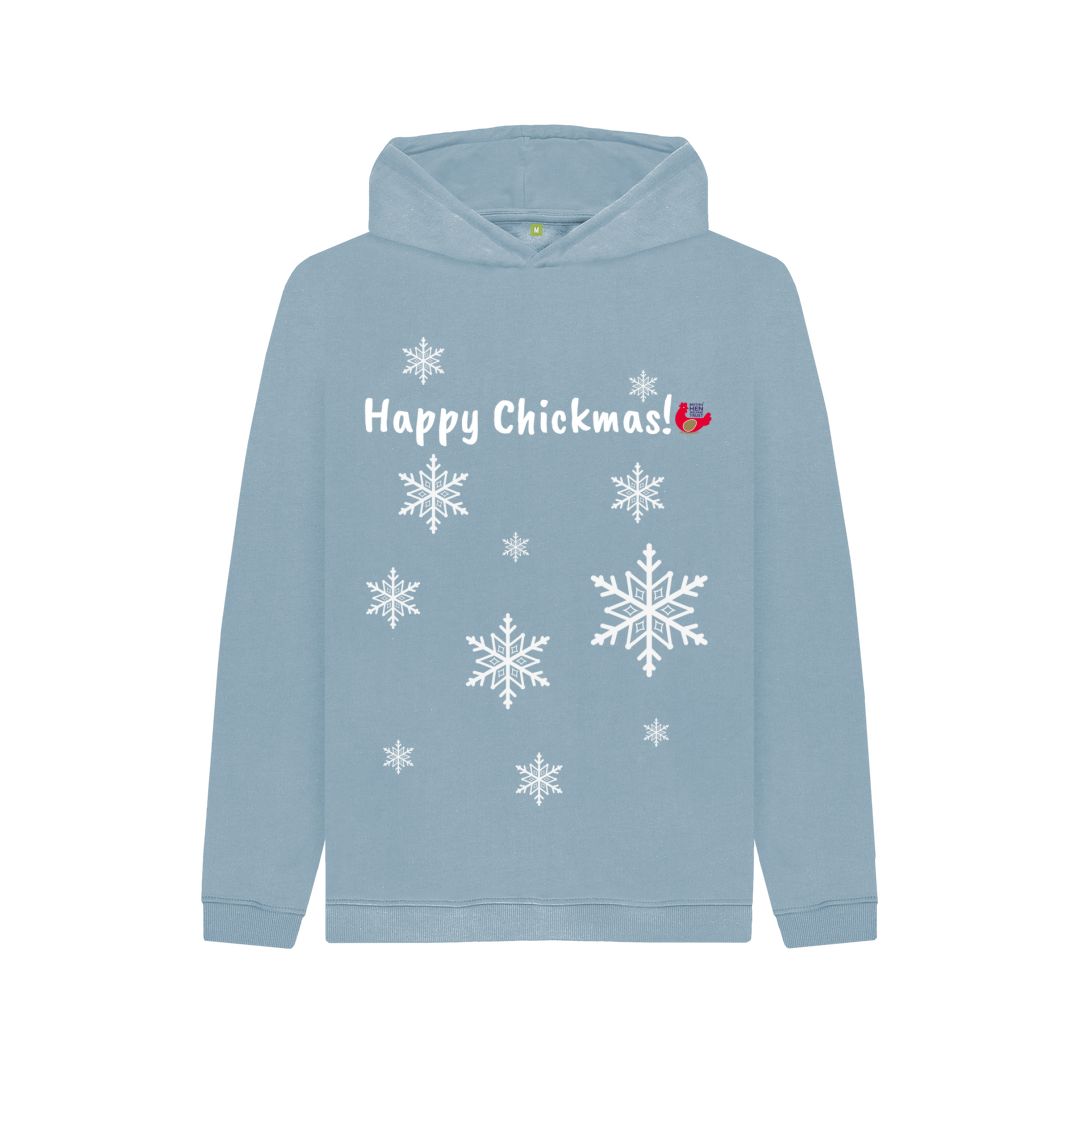 Stone Blue Kids Unisex Hoodie - Happy Chickmas! Snowflake